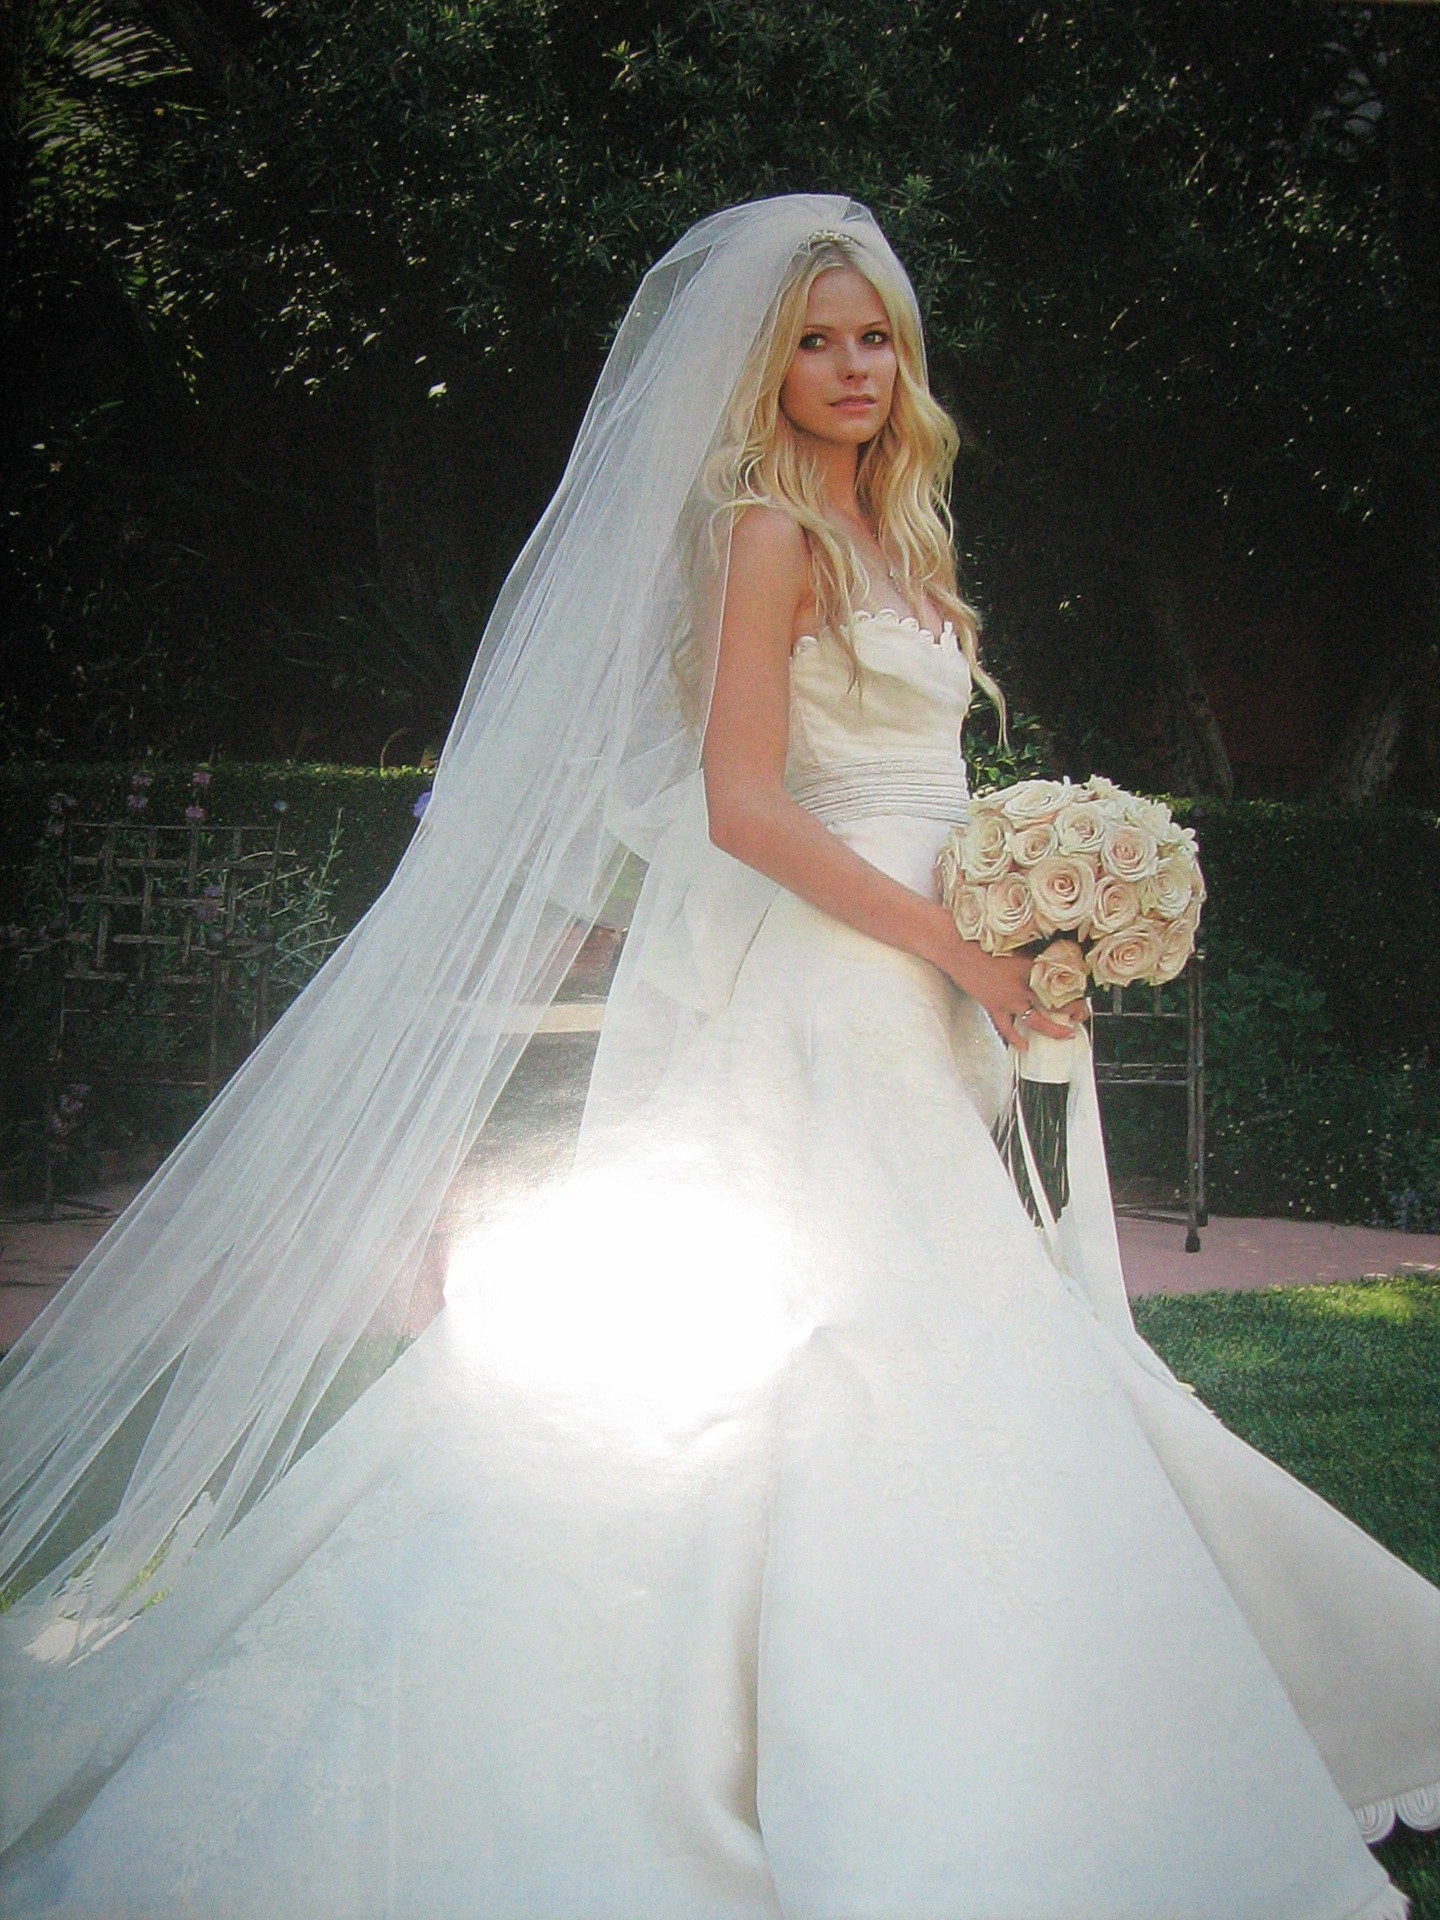 In her wedding dress